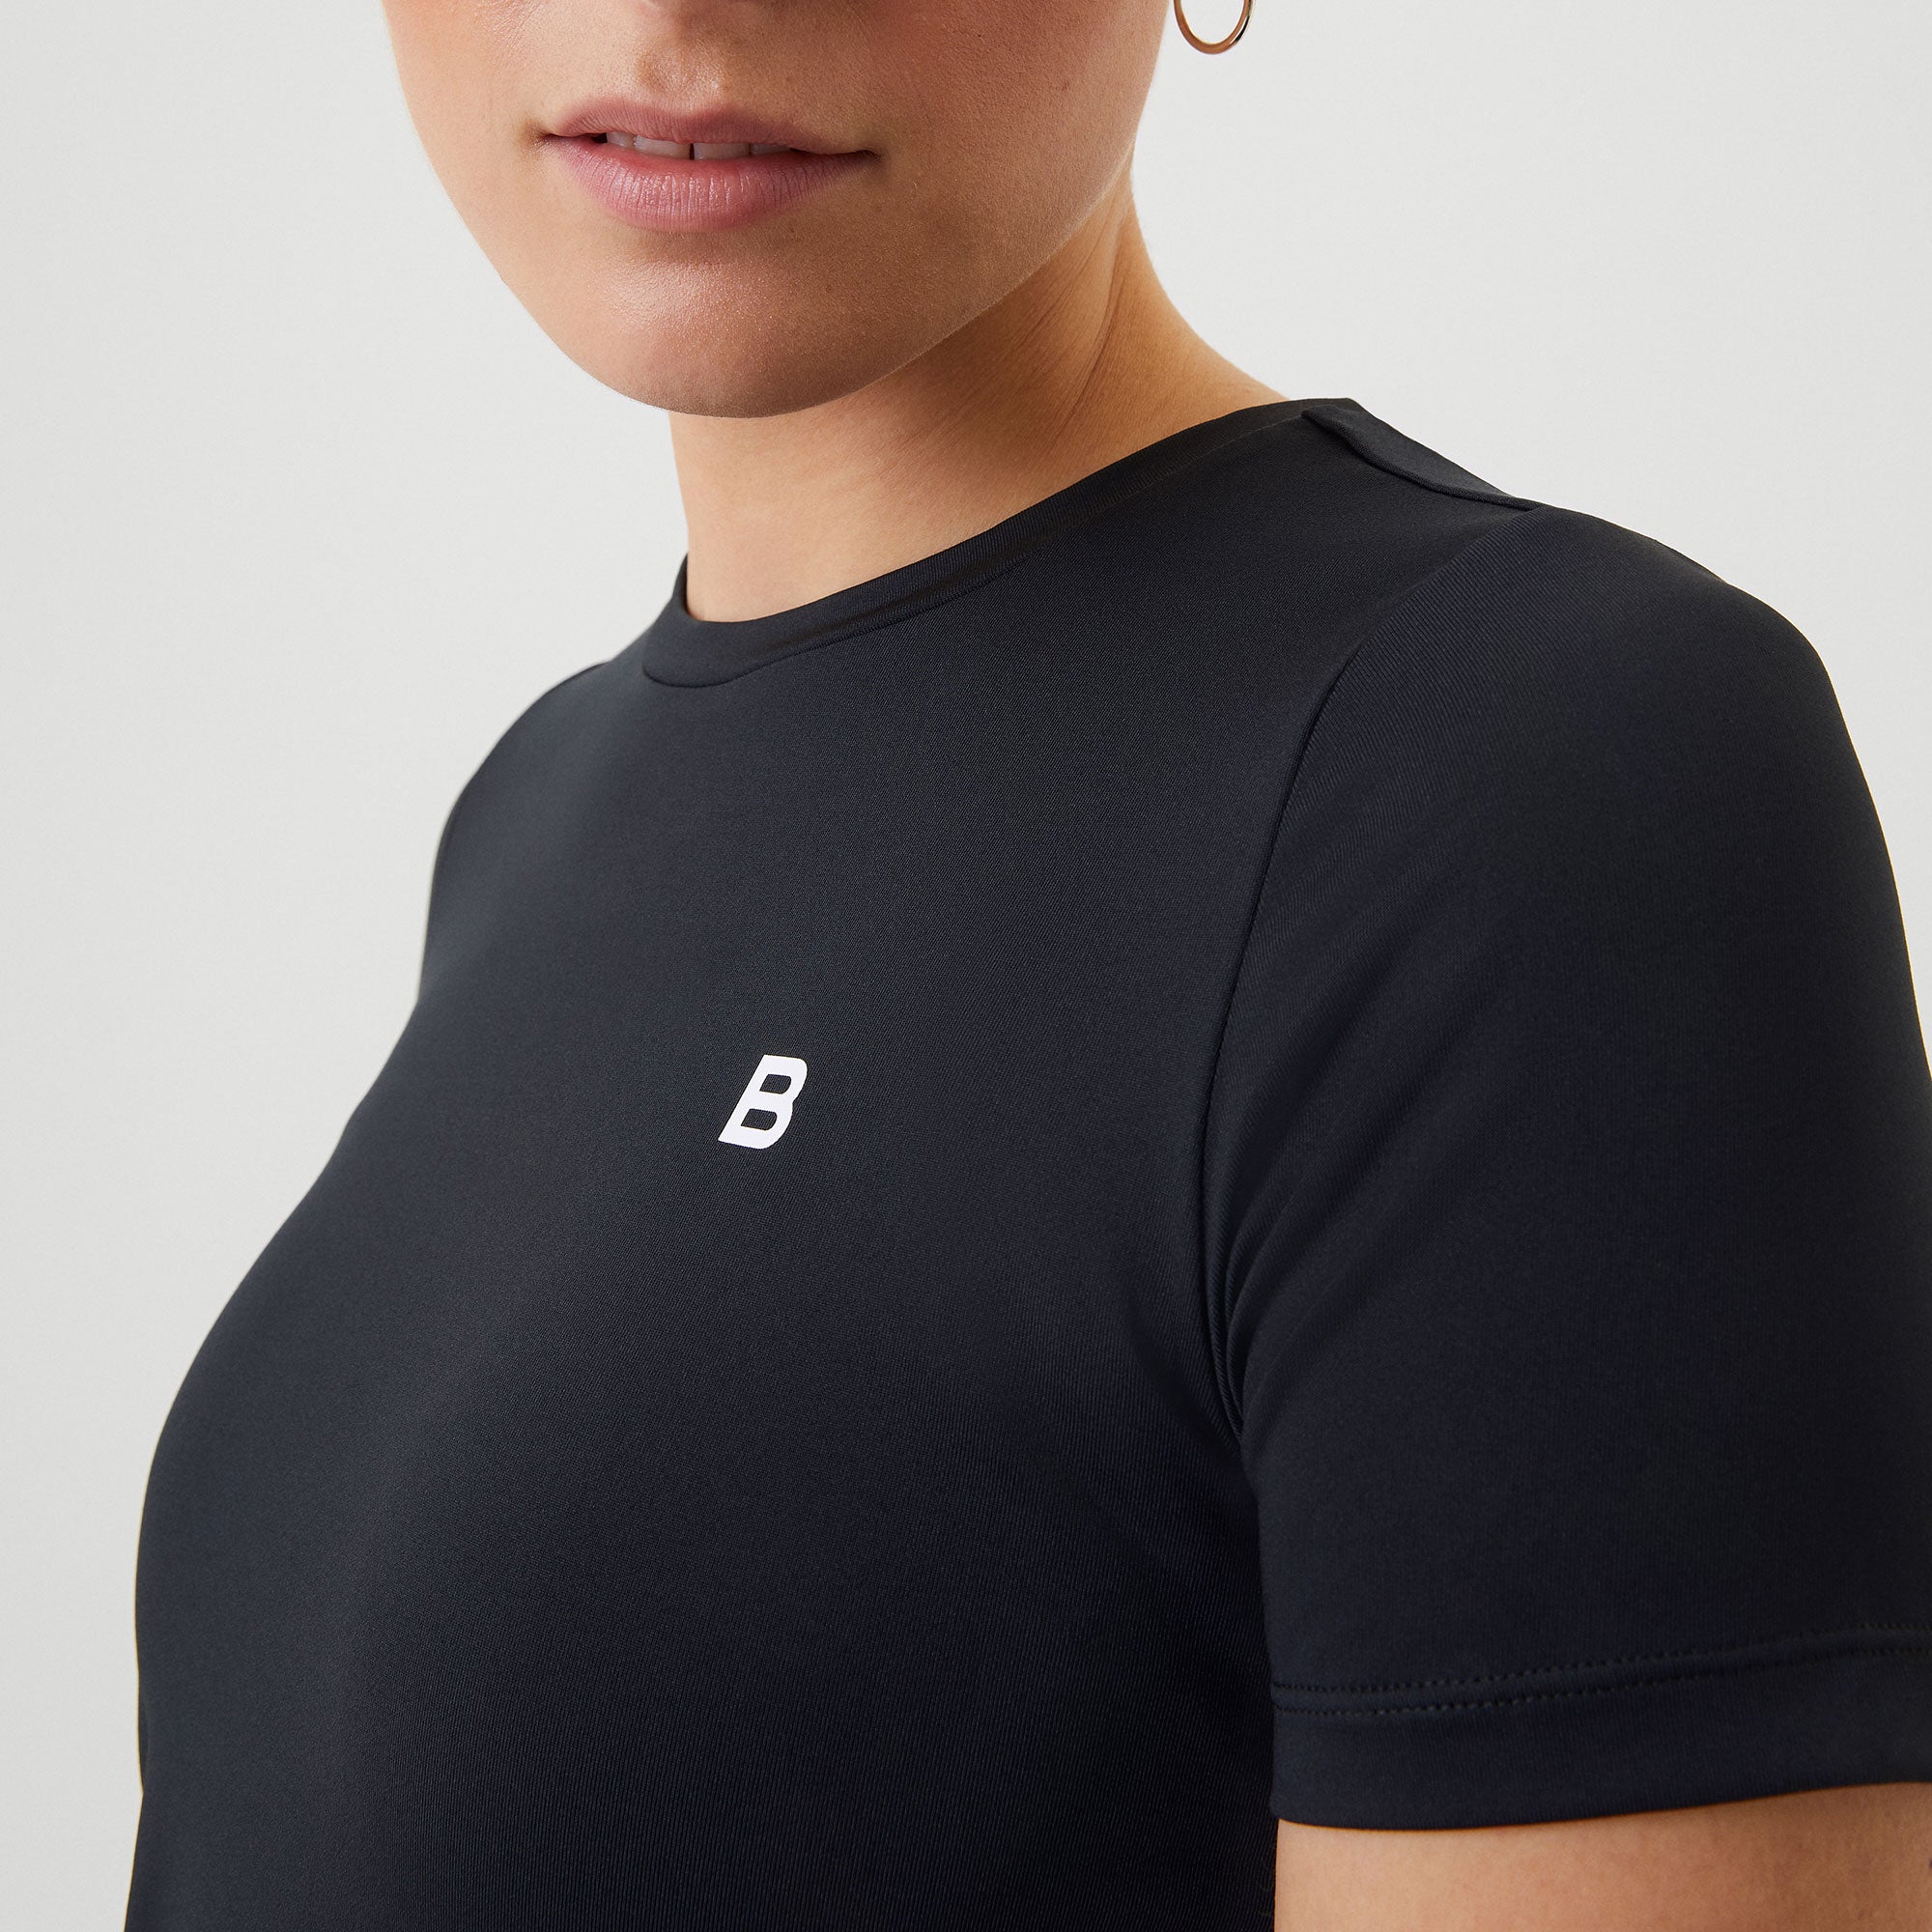 Björn Borg Ace Women's Slim Tennis Shirt - Black (4)